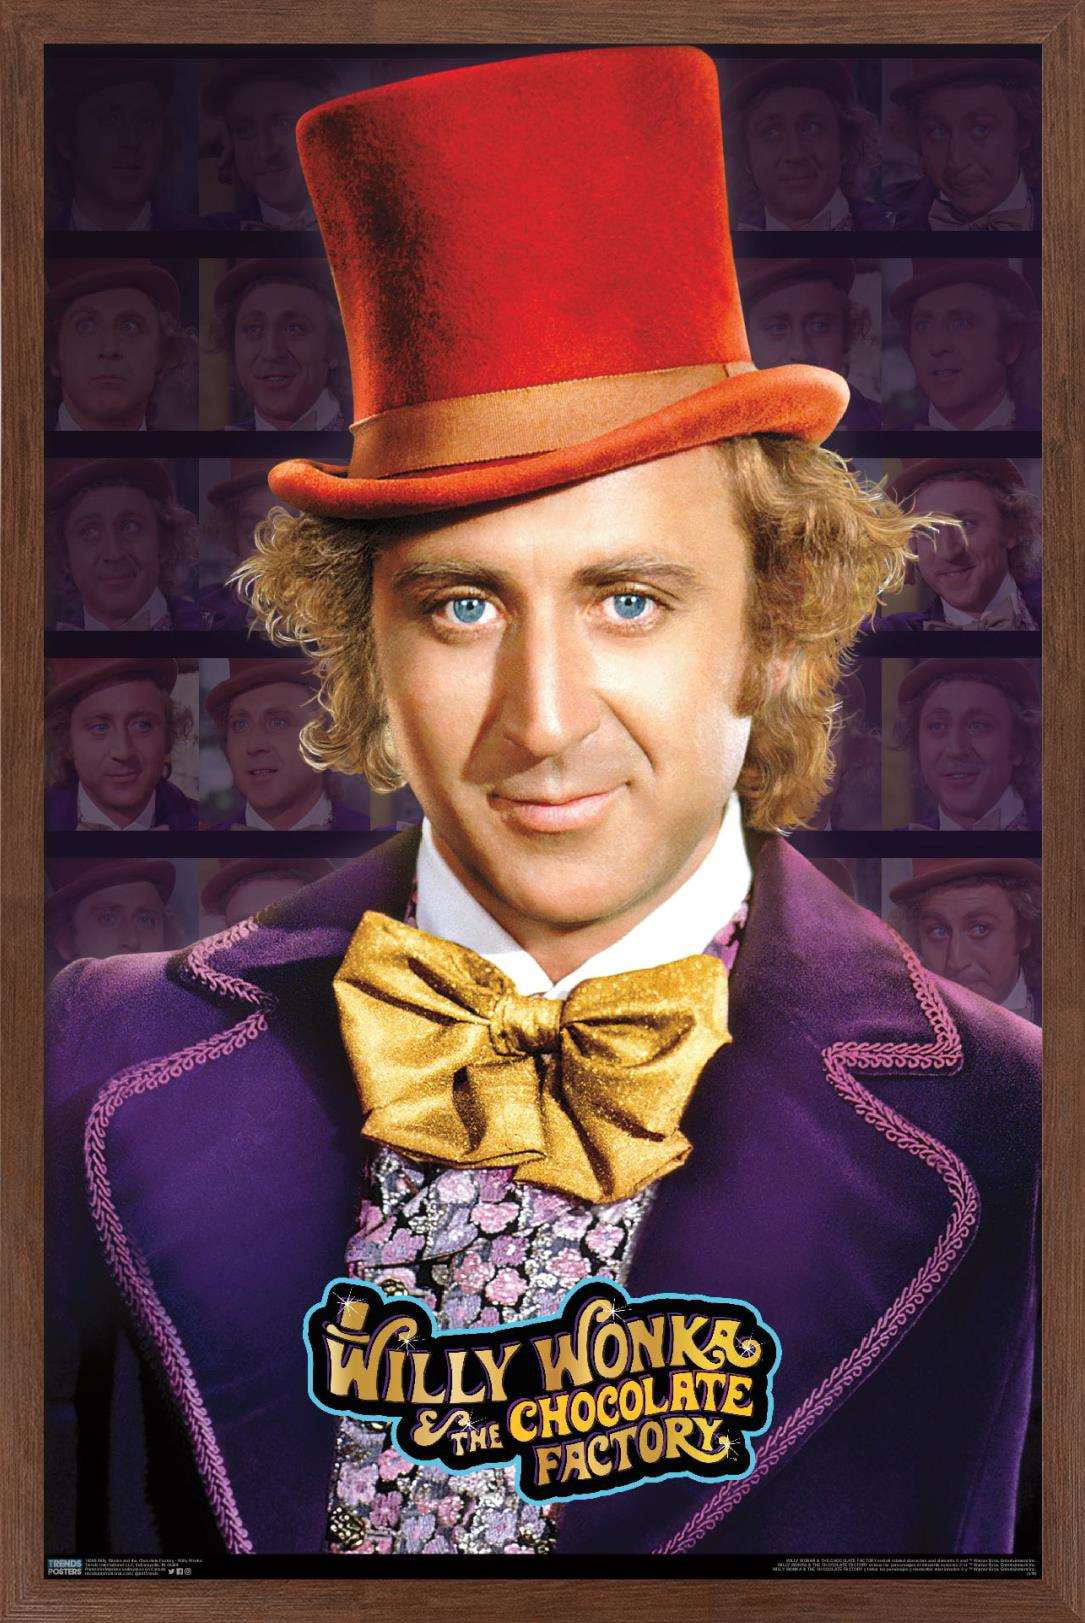 Willy Wonka The Chocolate Factory Willy Wonka and the Chocolate Factory - Willy Wonka Poster - Walmart